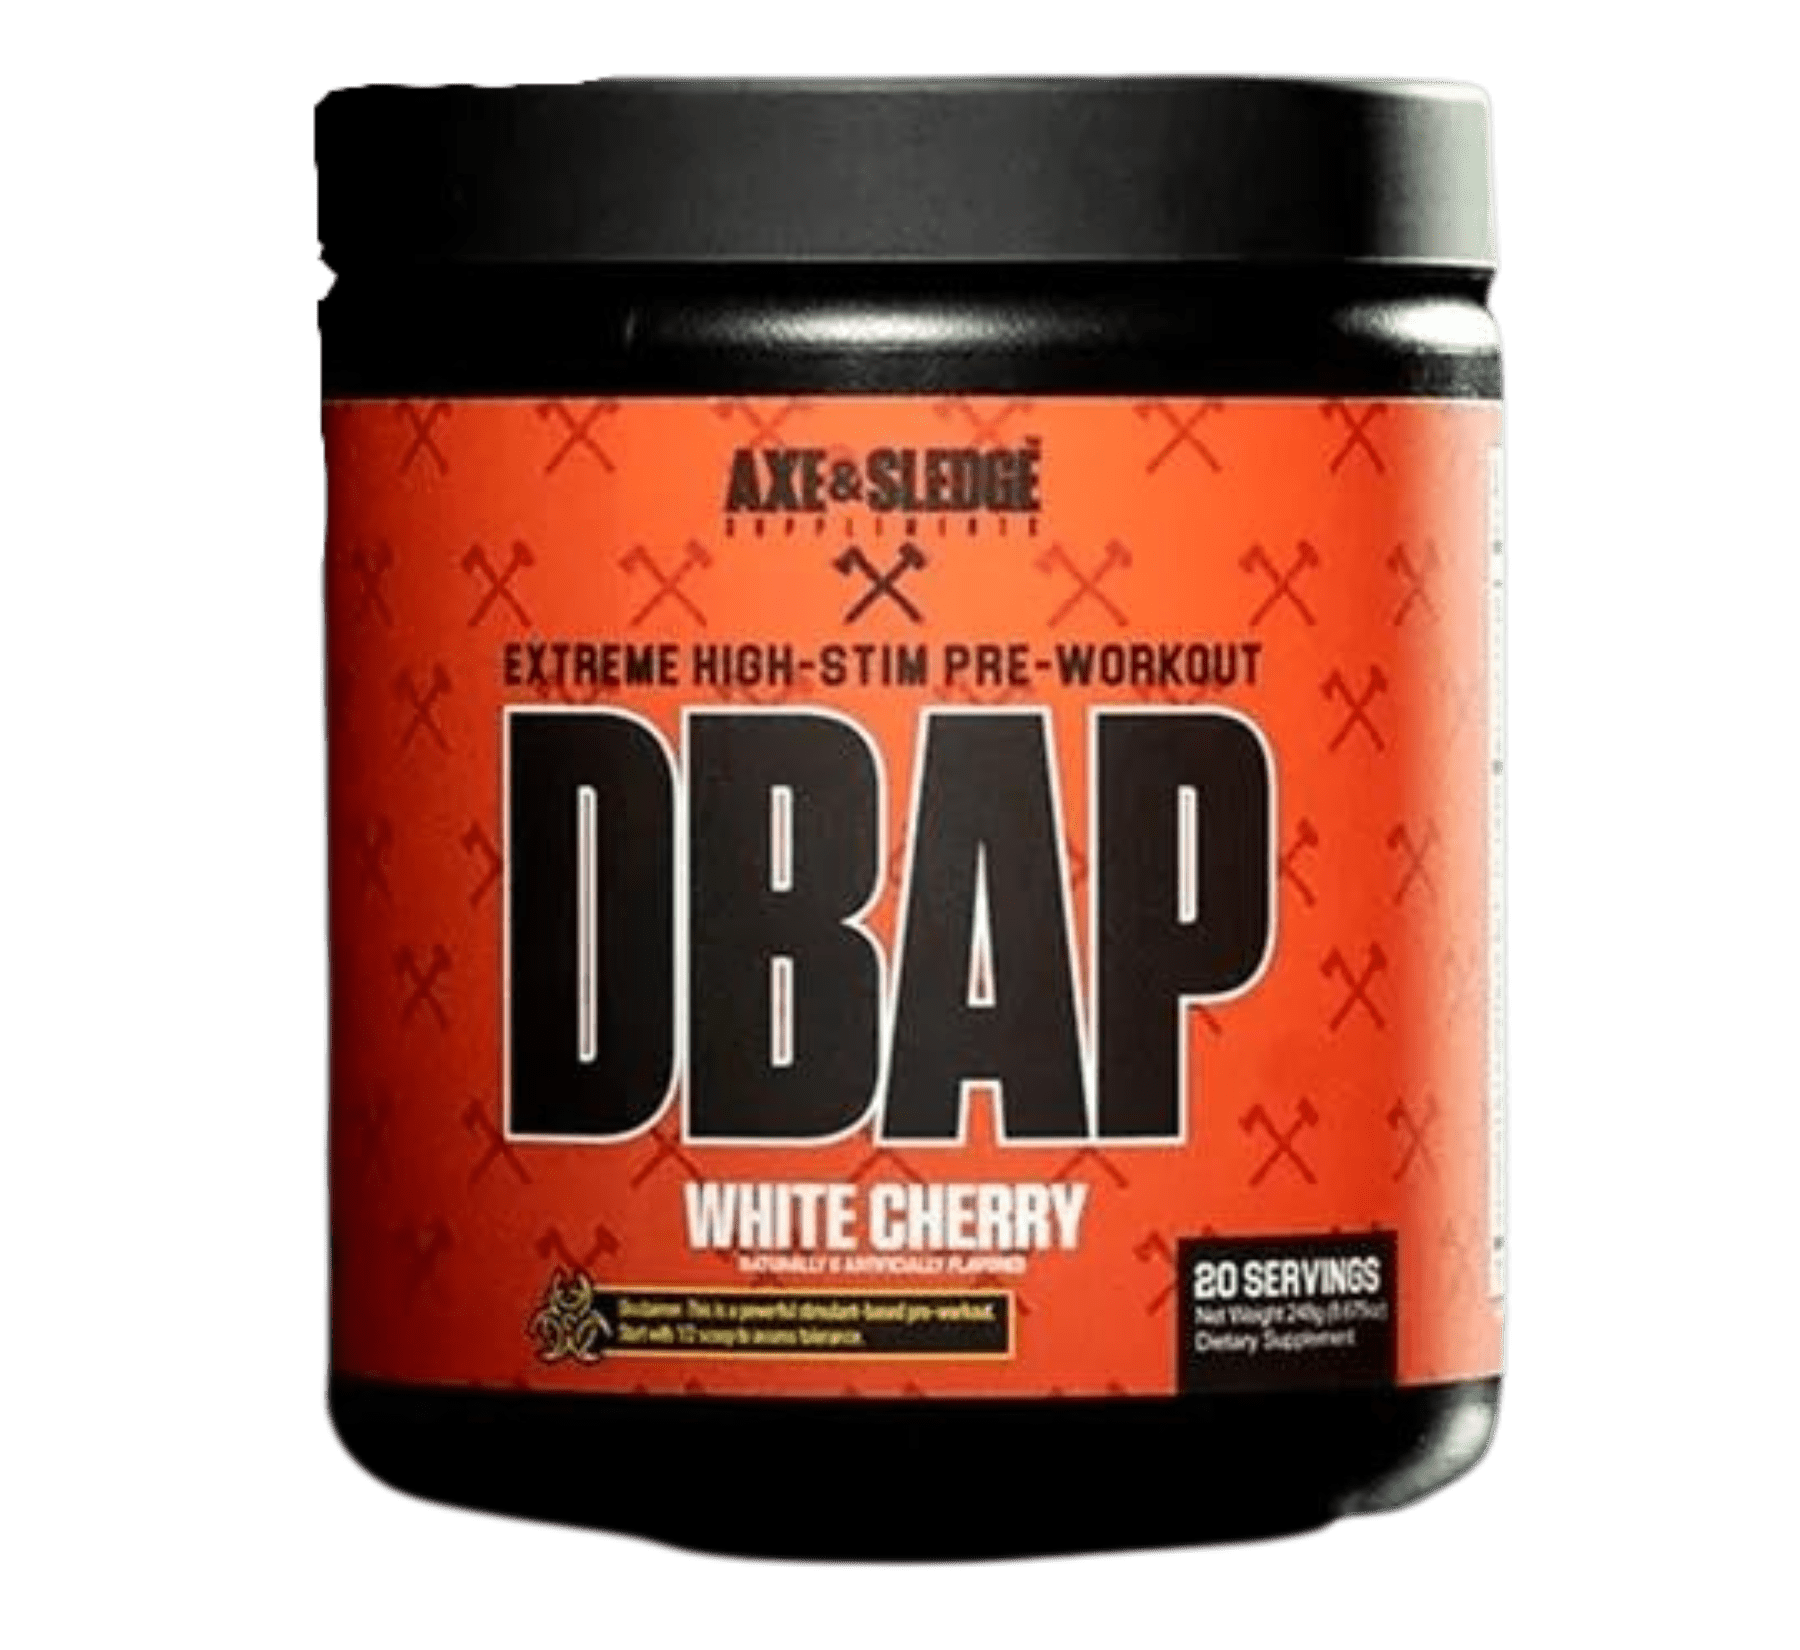 DBAP Pre Workout - Bemoxie Supplements